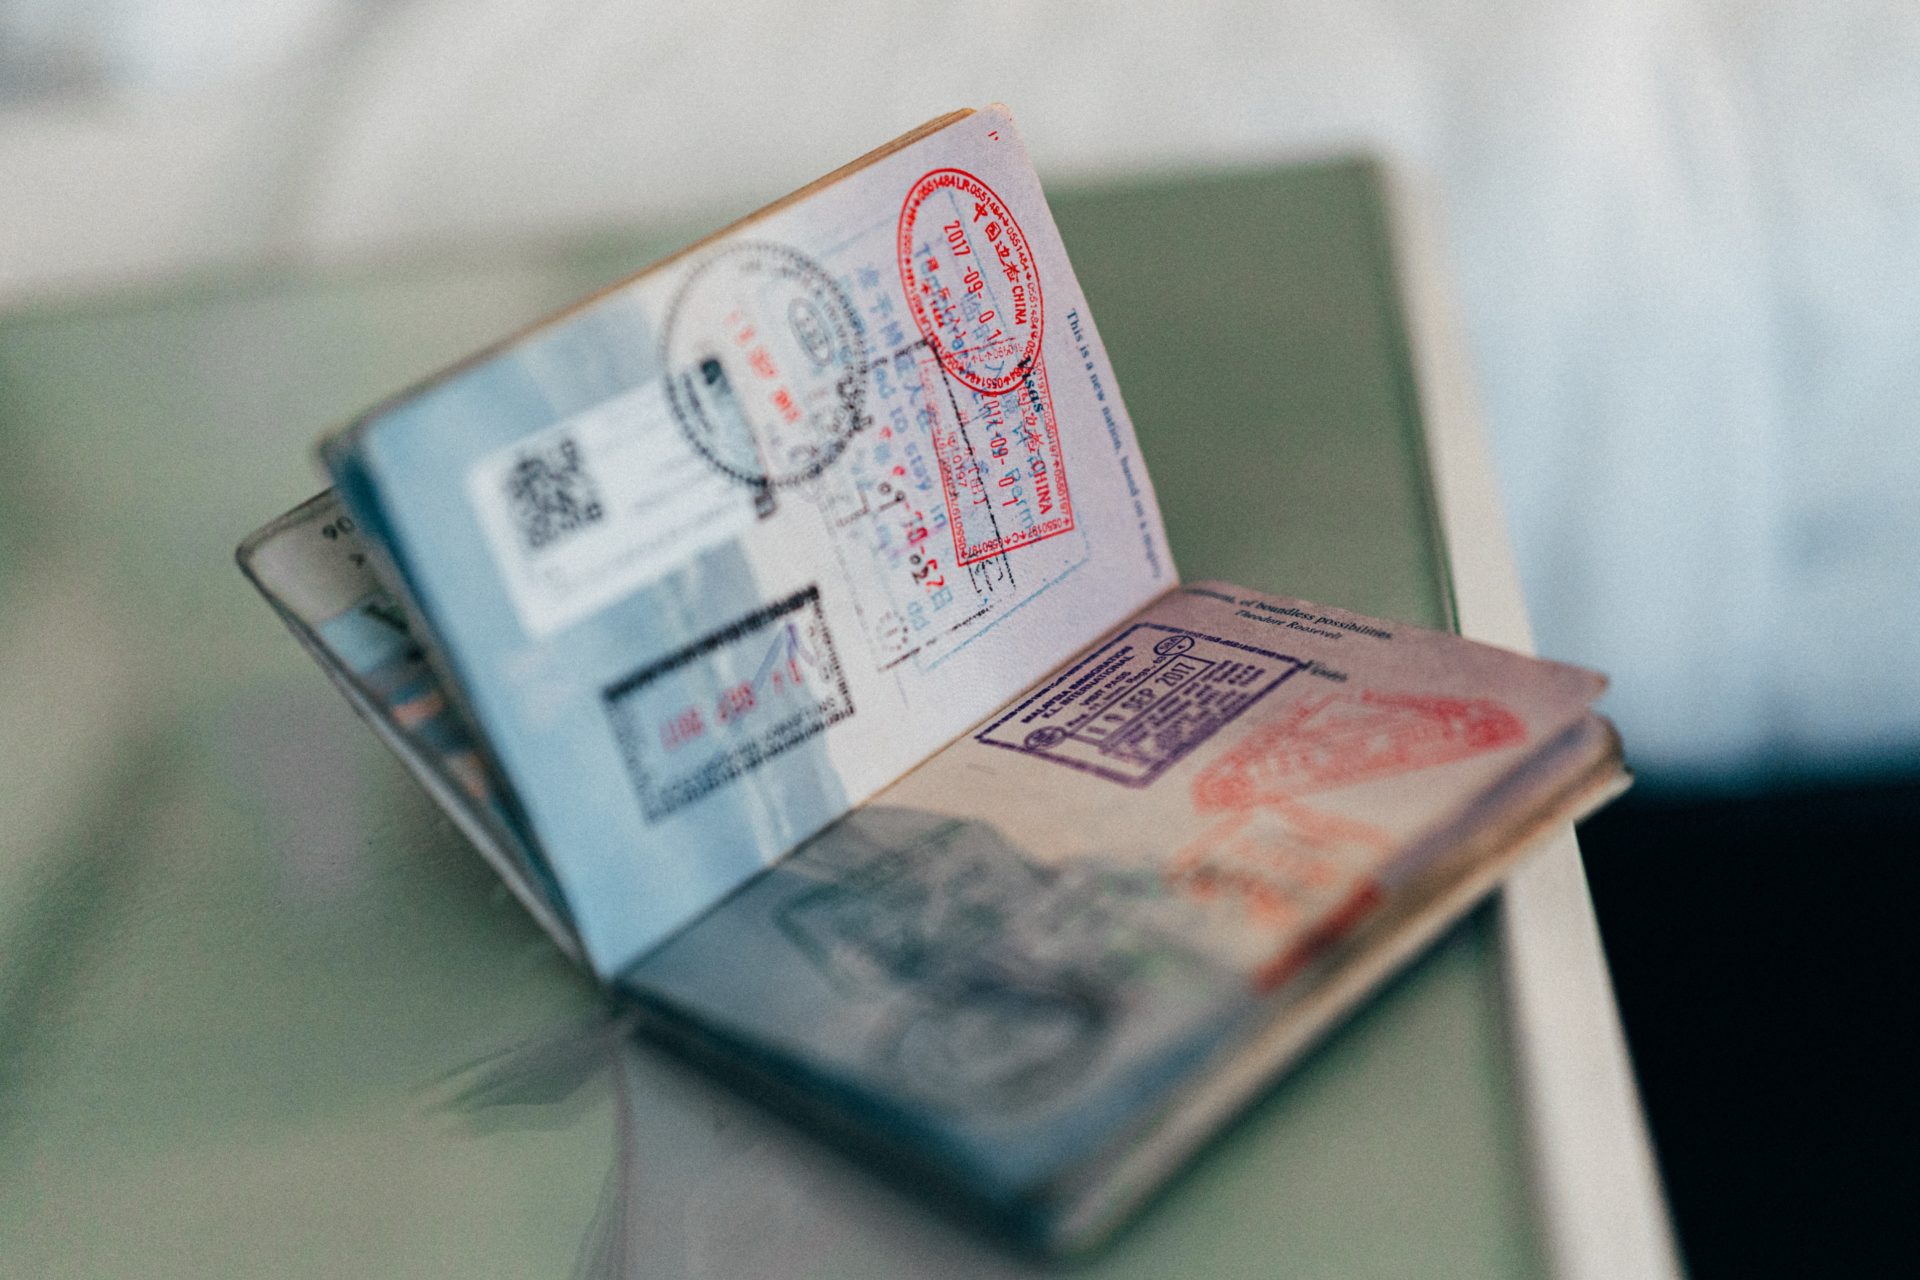 identificación digital pasaporte